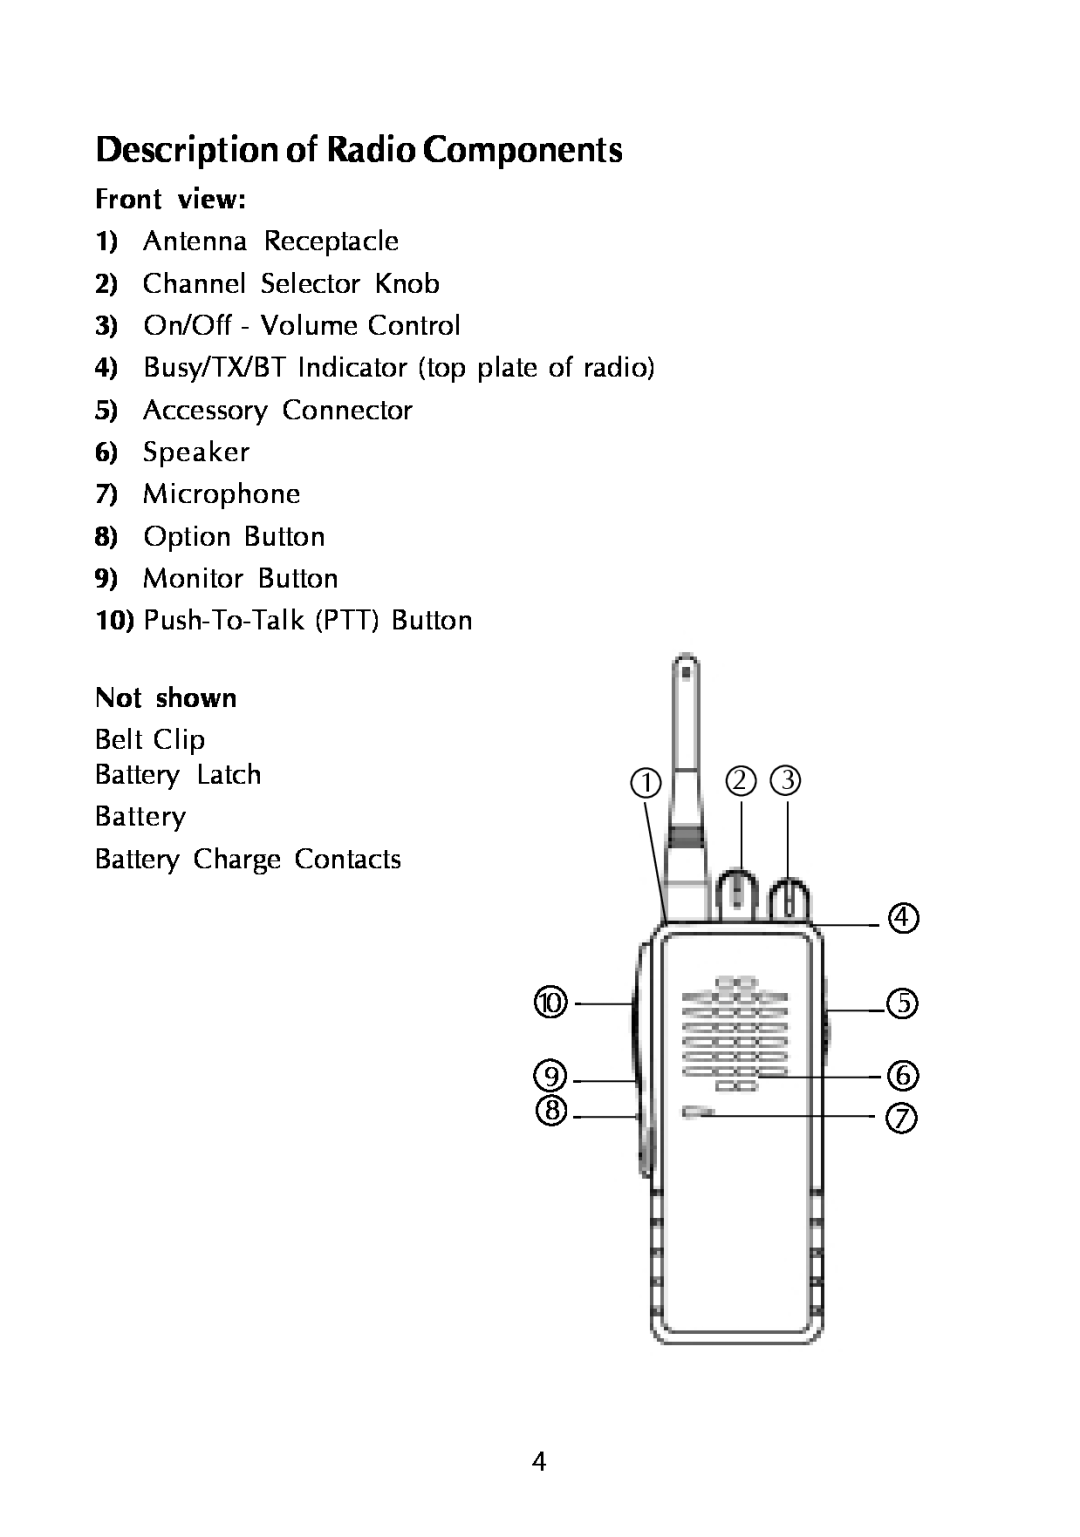 Maxon Telecom SP-310, SP-330 & SP-340, SP-320 manual Description of Radio Components, Front view, Not shown 